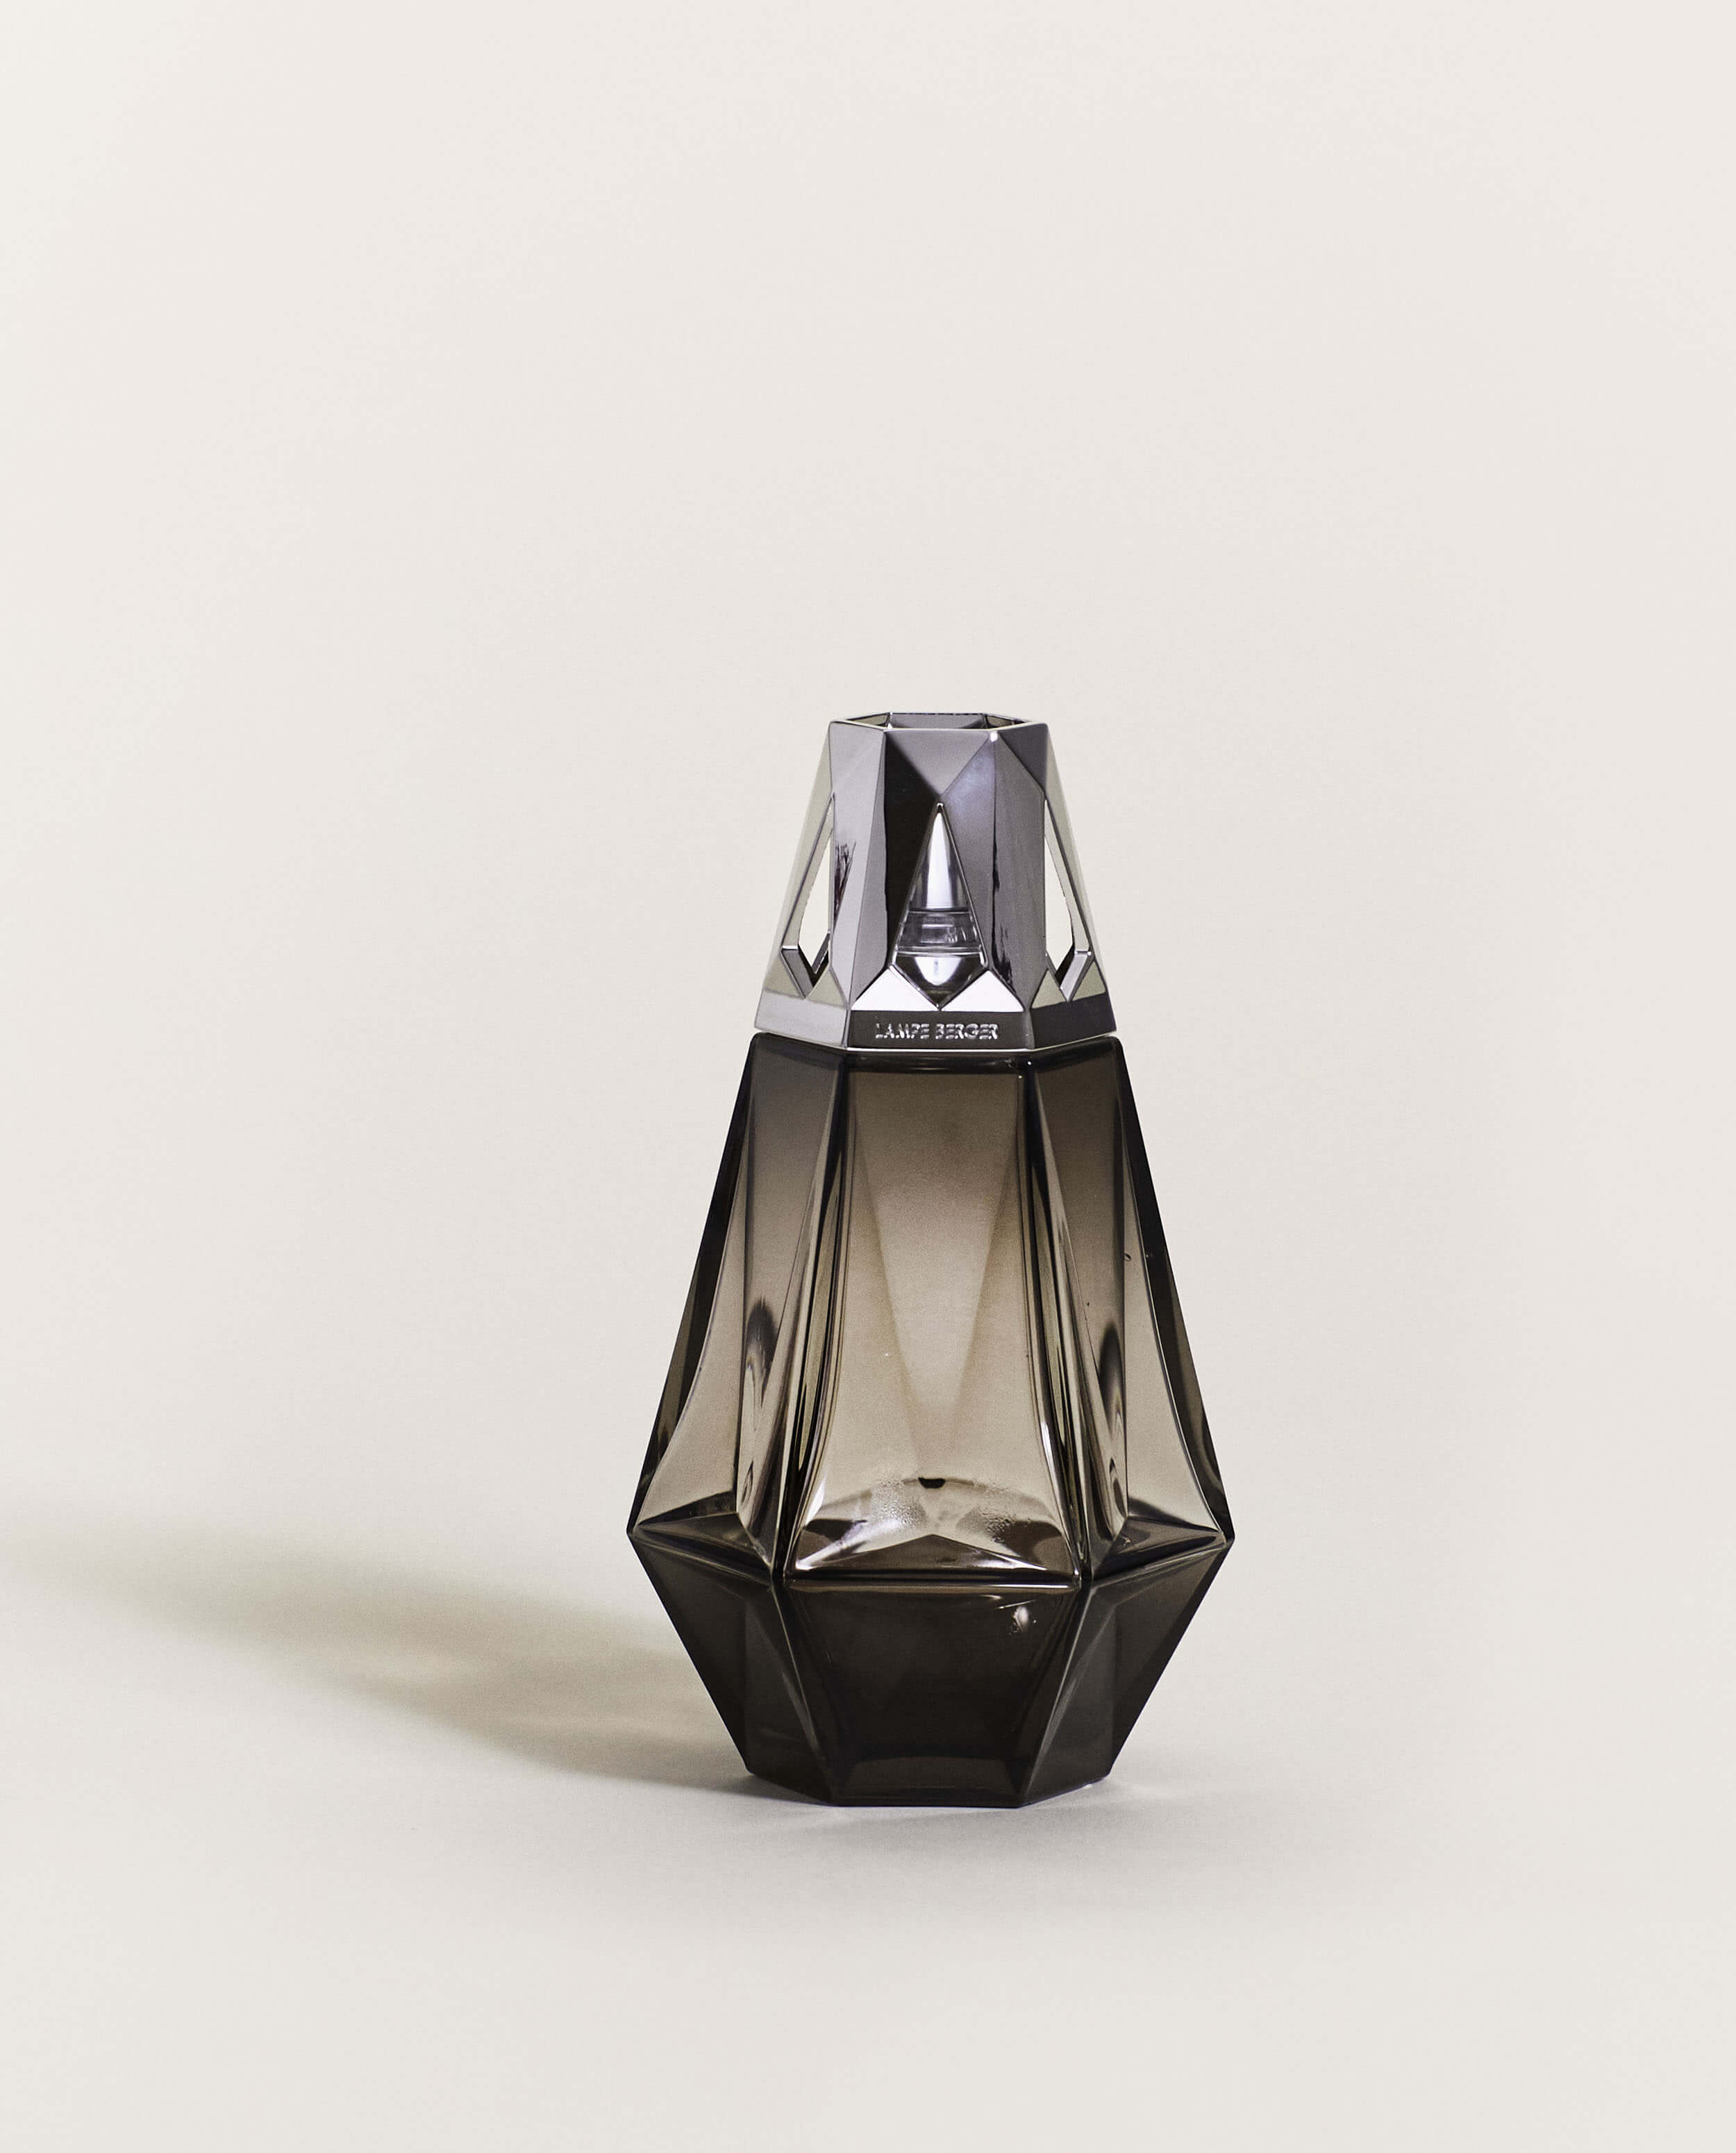 MAISON BERGER - Lampe Berger Model Facette - Home Fragrance Lamp Diffuser -  5.9 x 3.9 x 3.9 inches - Includes Fragrance Cotton Caress - 8.45 Fluid